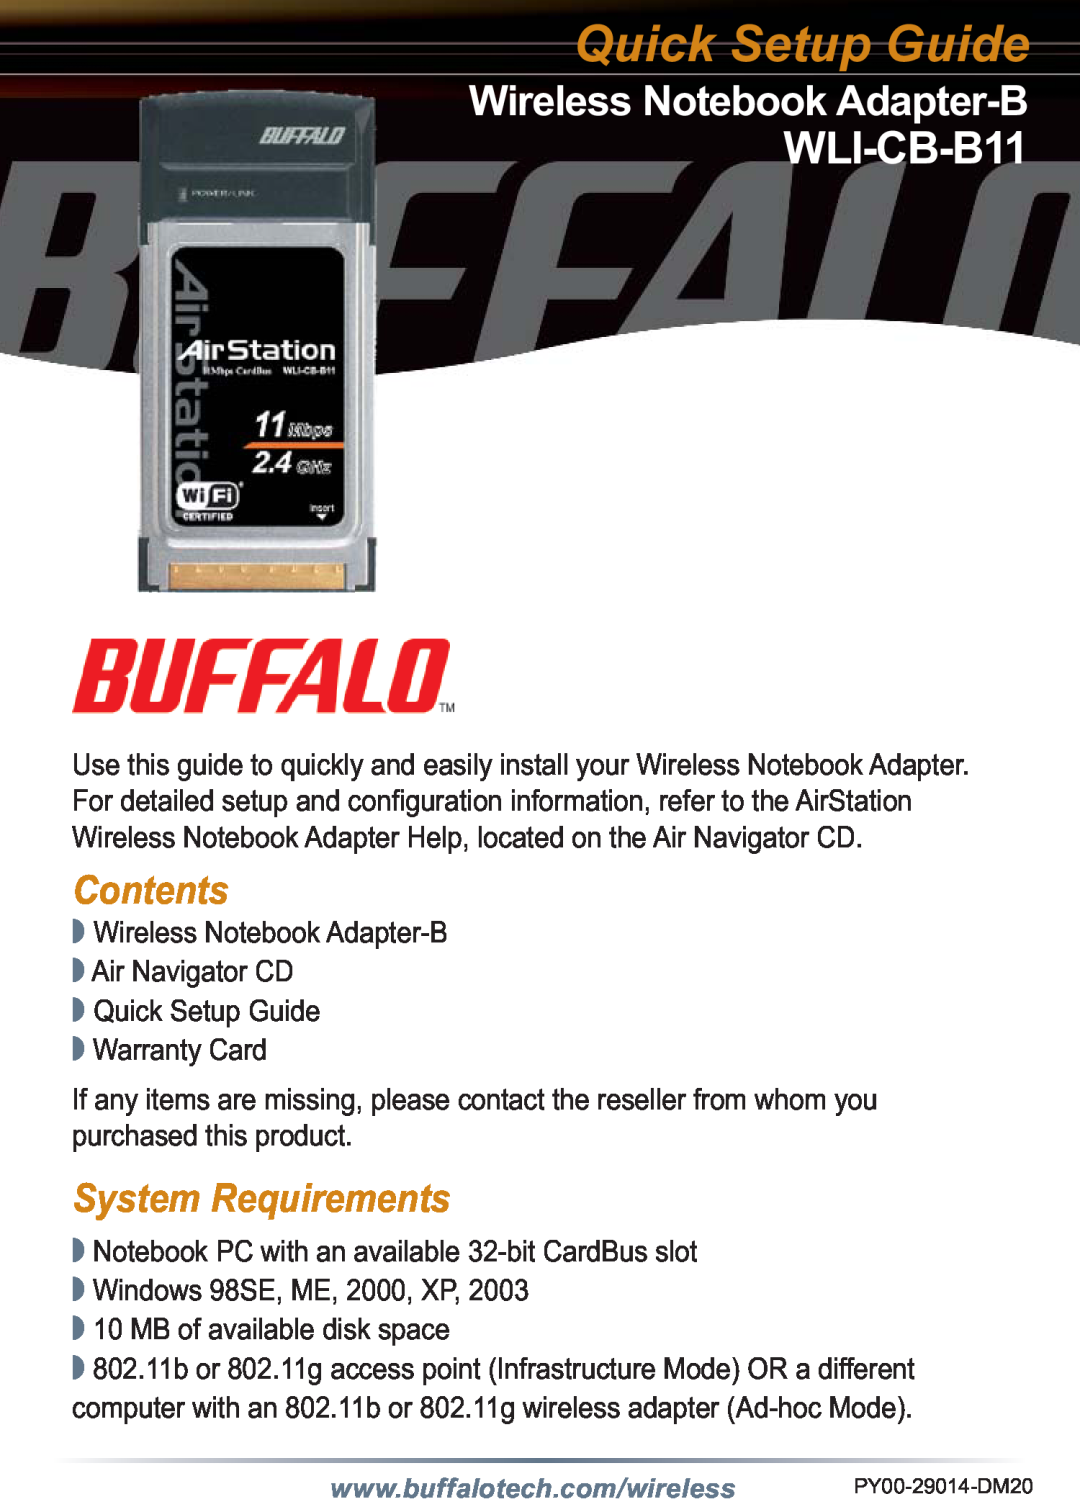 Buffalo Technology WLI-CB-B11 setup guide Quick Setup Guide, Wireless Notebook Adapter-B, Contents, System Requirements 